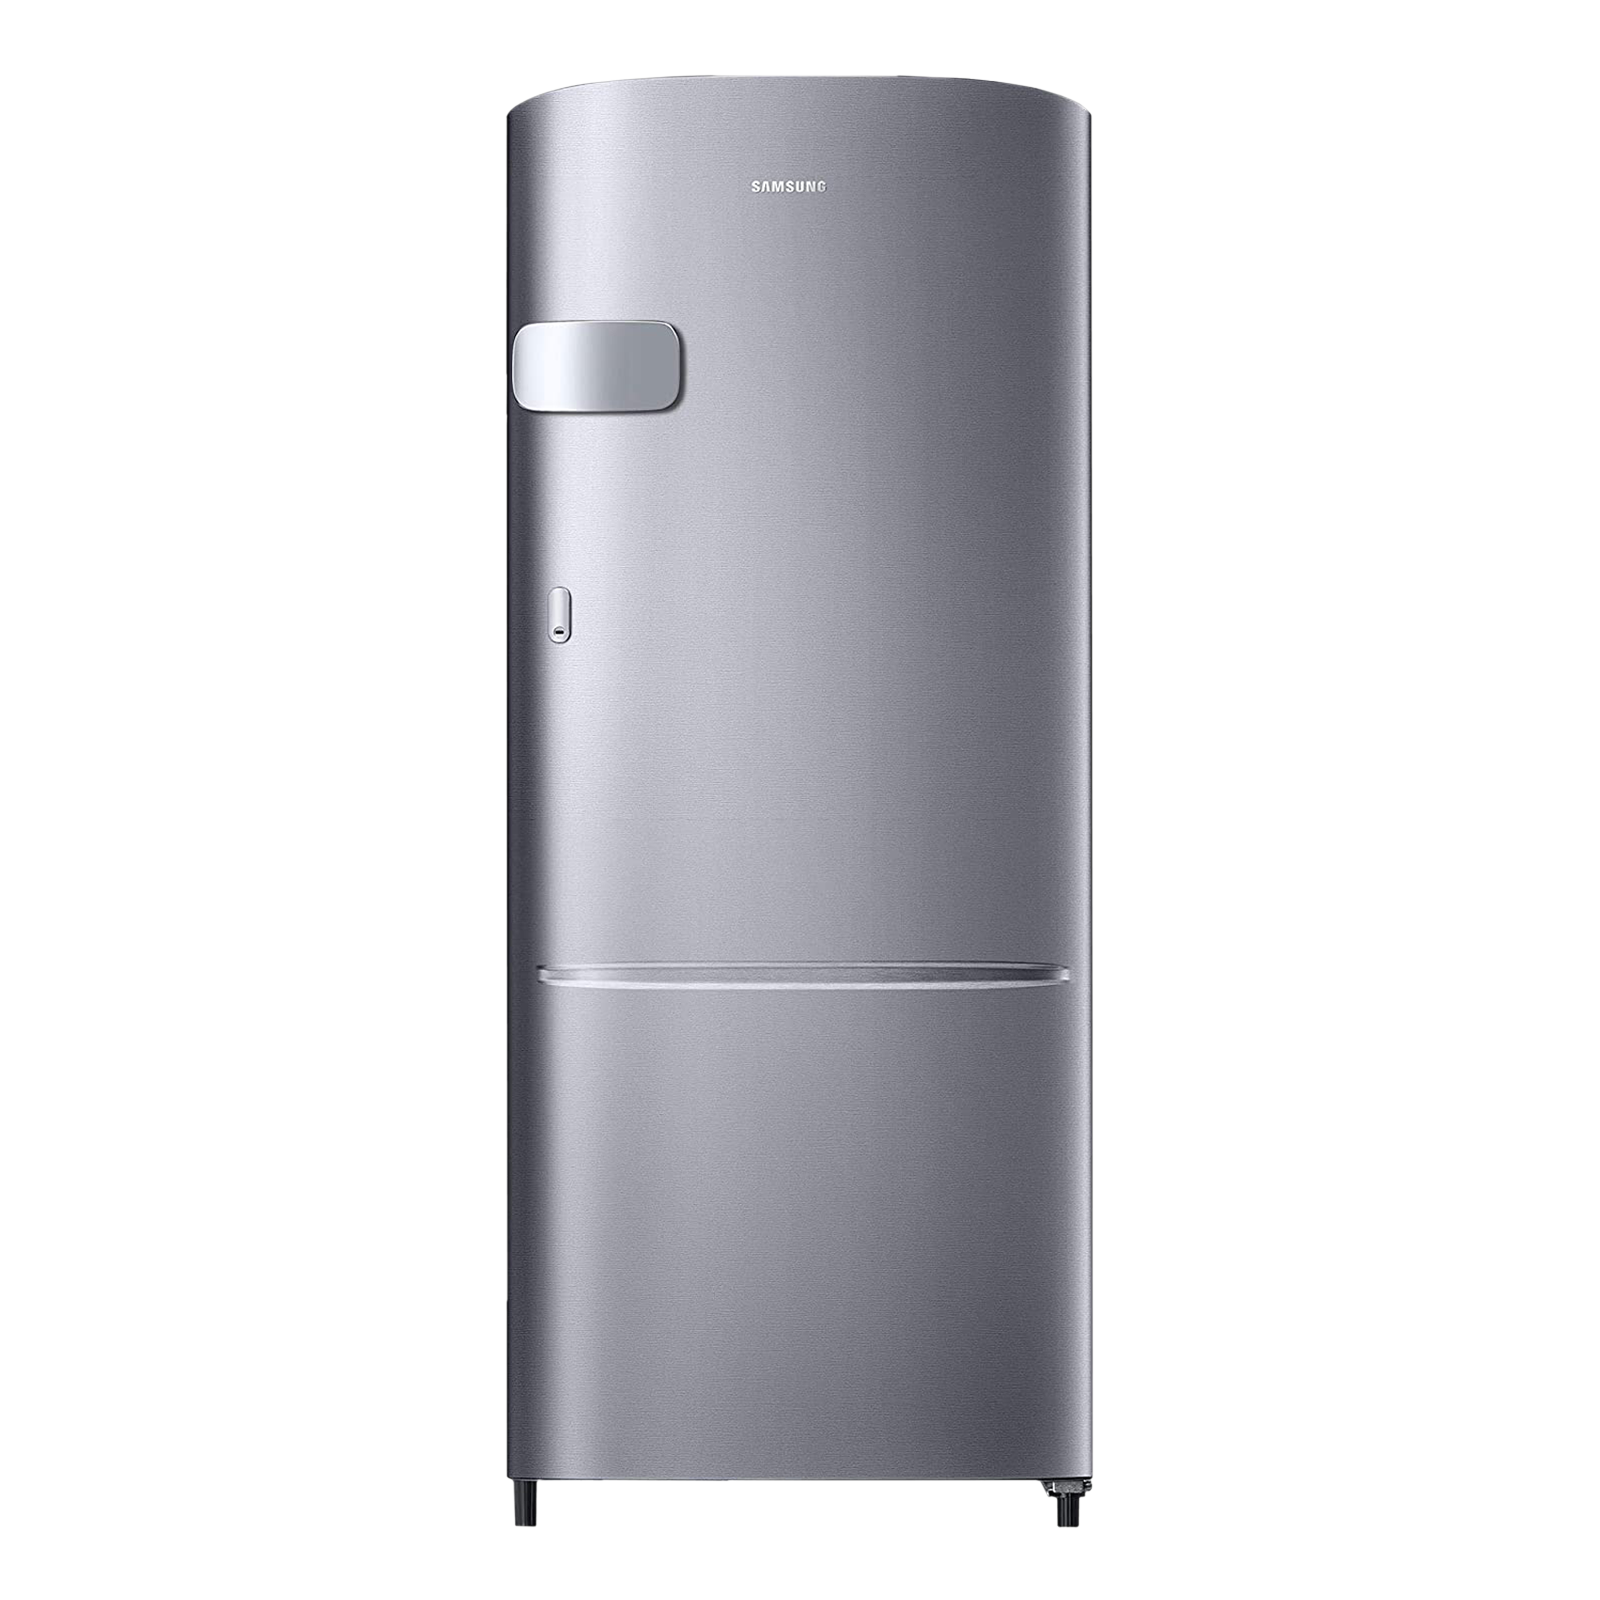 

SAMSUNG Stylish Grande 192 Litres 2 Star Direct Cool Single Door Refrigerator with Anti-Bacterial Gasket (RR20A2Y1BS8/NL, Elegant Inox), No color